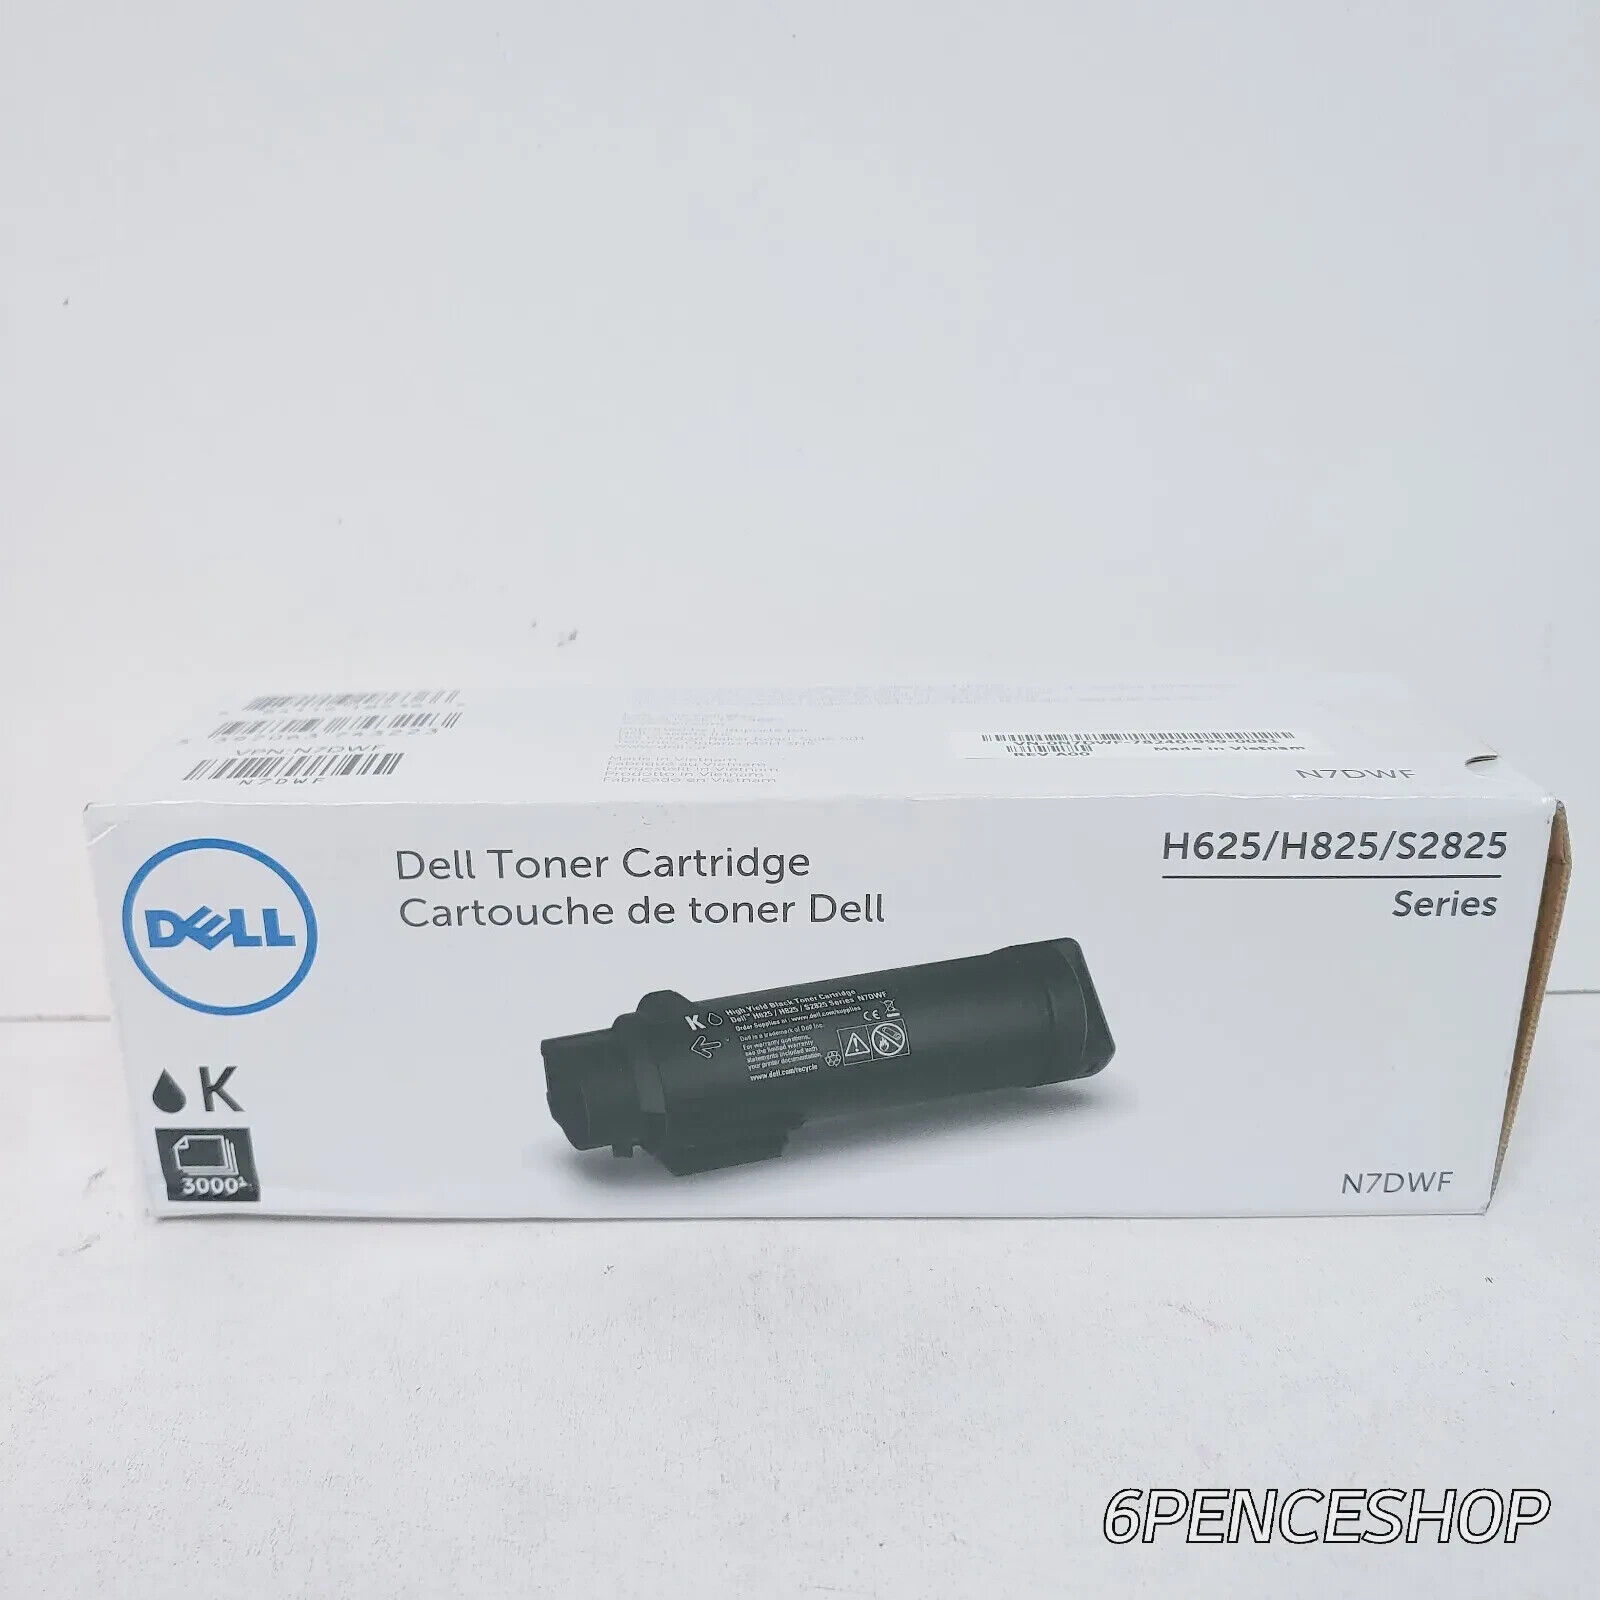 New Dell N7DWF Black Original Toner Cartridge for H625/H825/S2825 Series